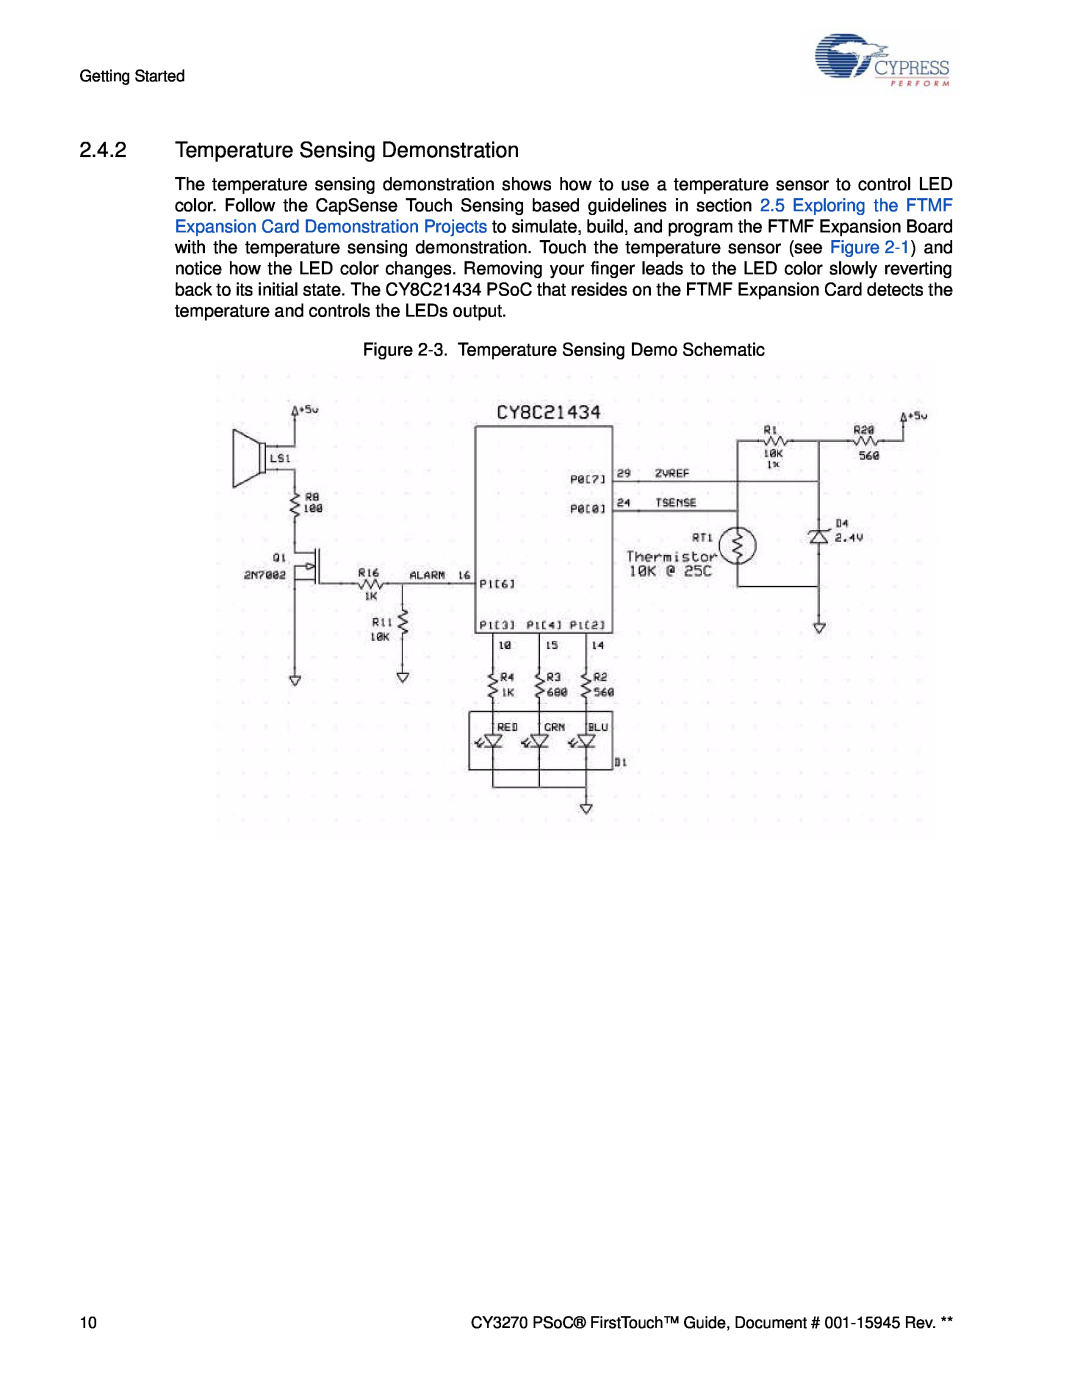 Cypress CY3270 manual Temperature Sensing Demonstration 